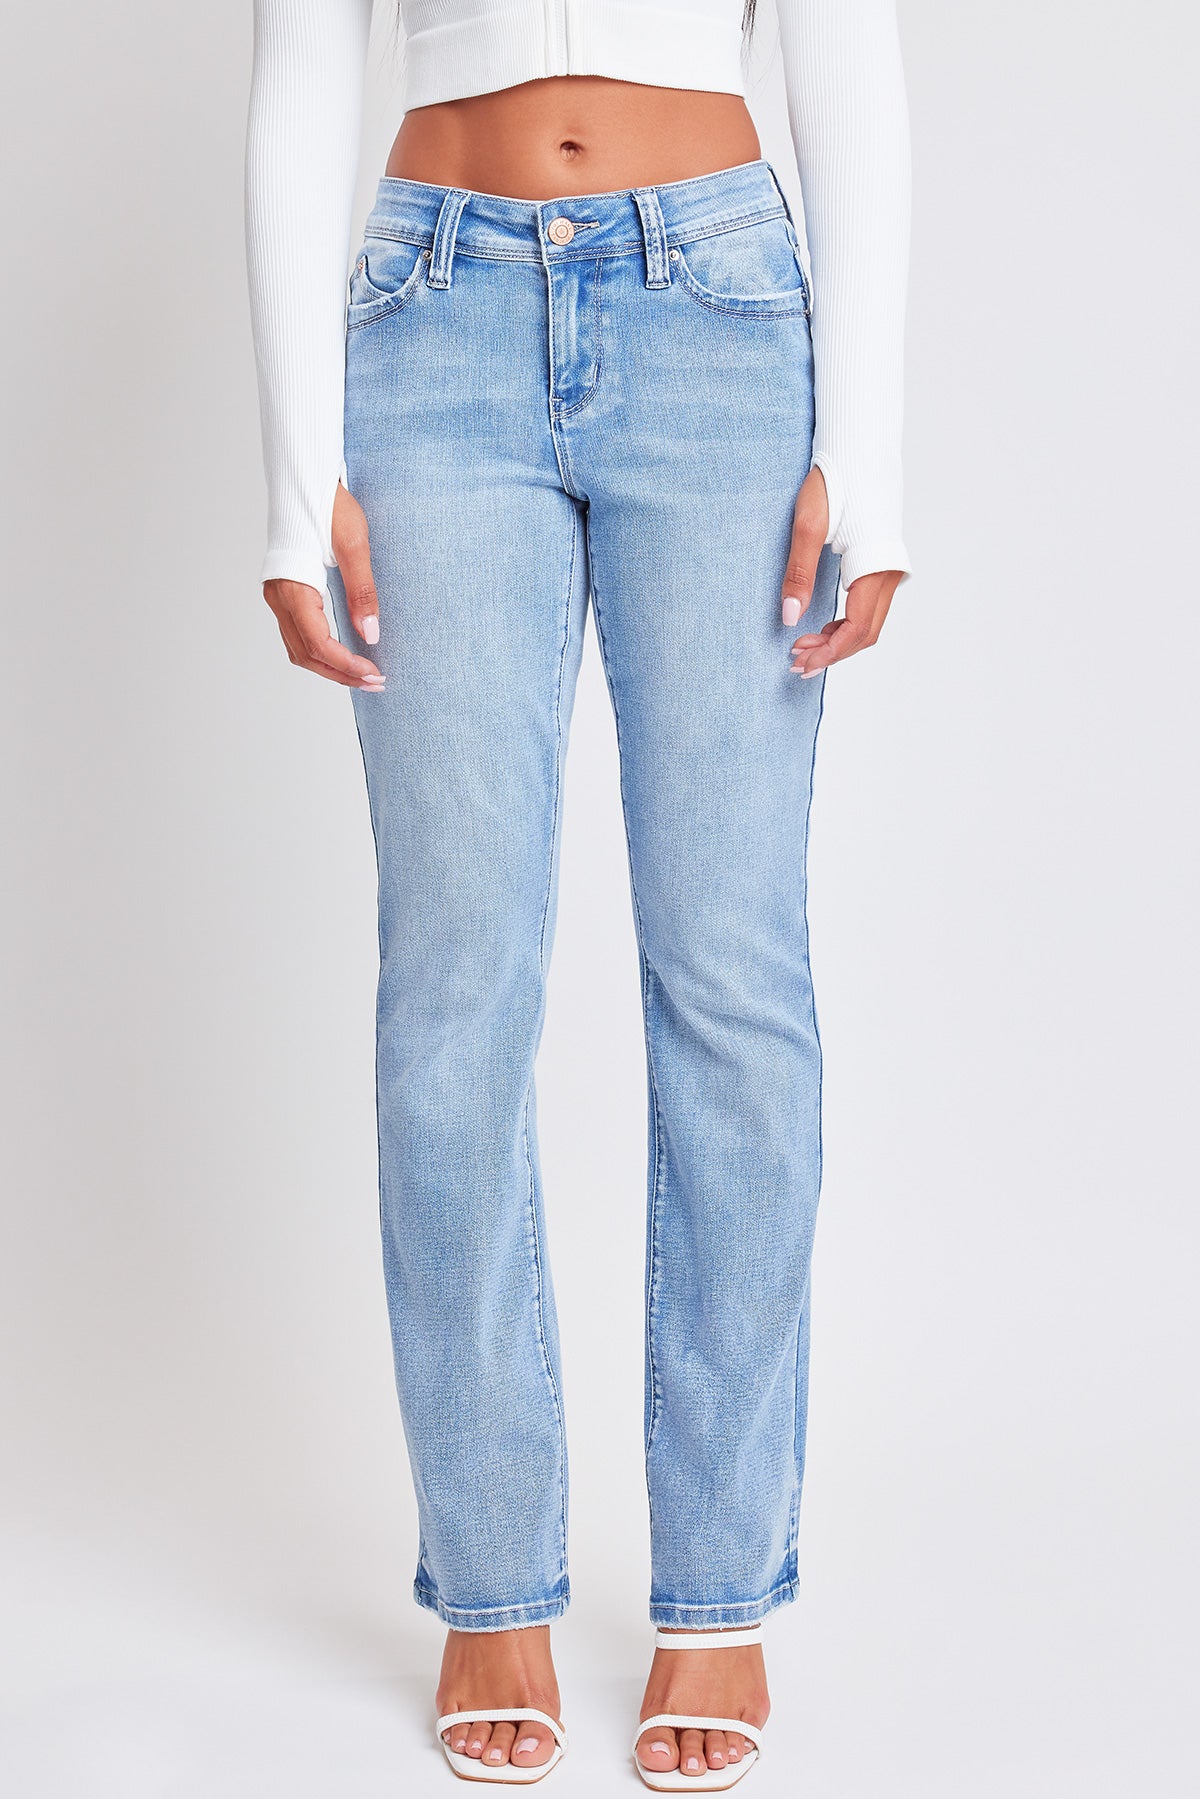 (Y40) Bubblegum Jeans Juniors Size 5 Medium Wash Denim Boot Cut 